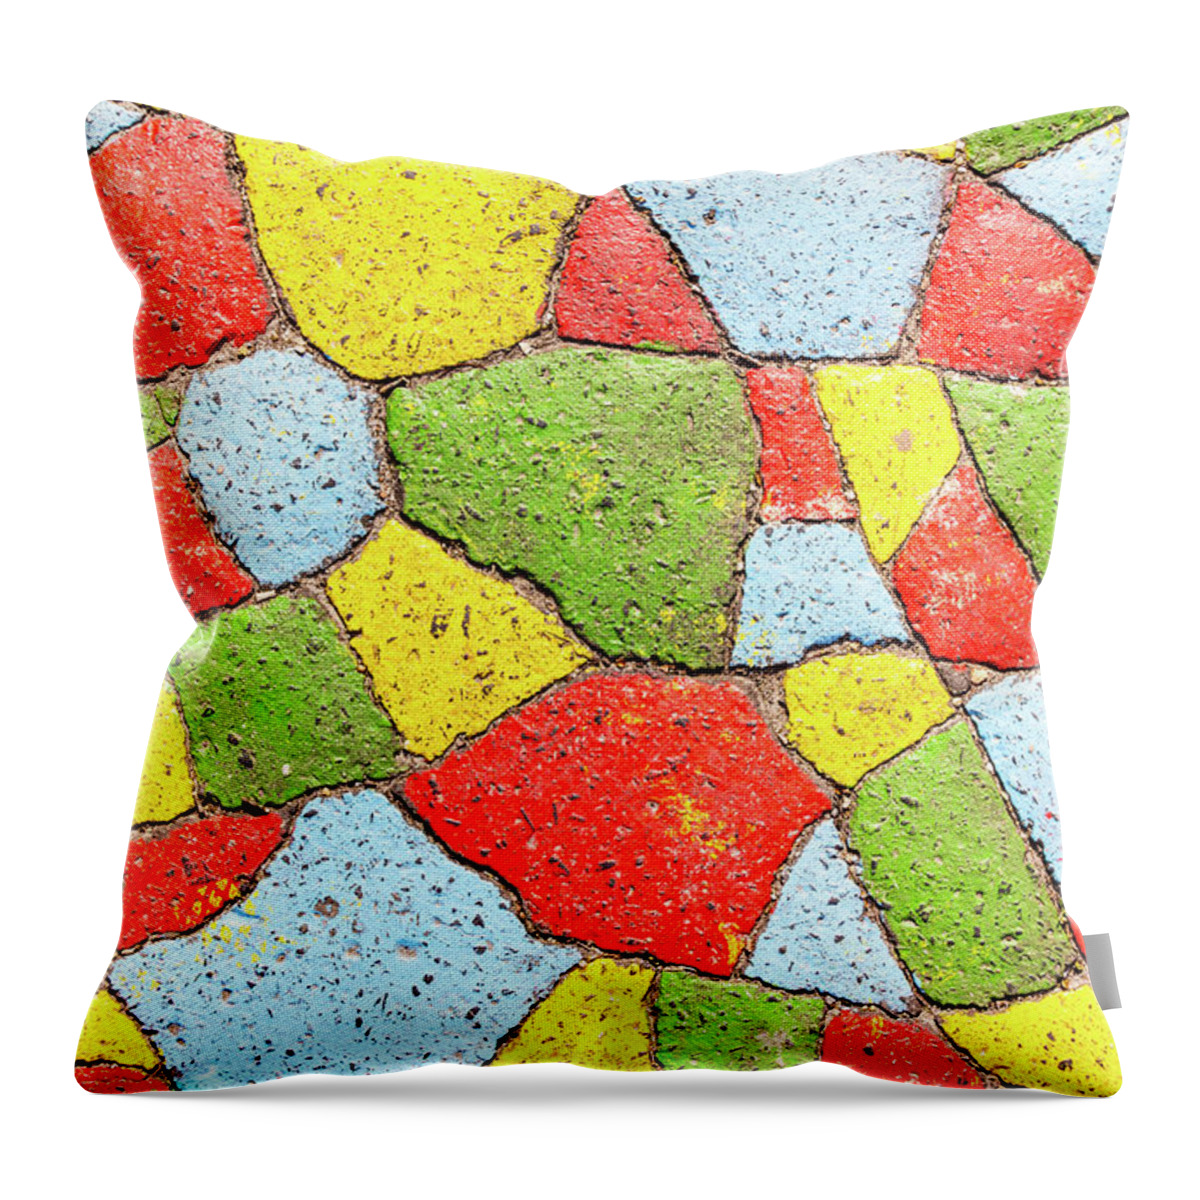 Asphalt Throw Pillow featuring the photograph Four color theorem by Viktor Wallon-Hars